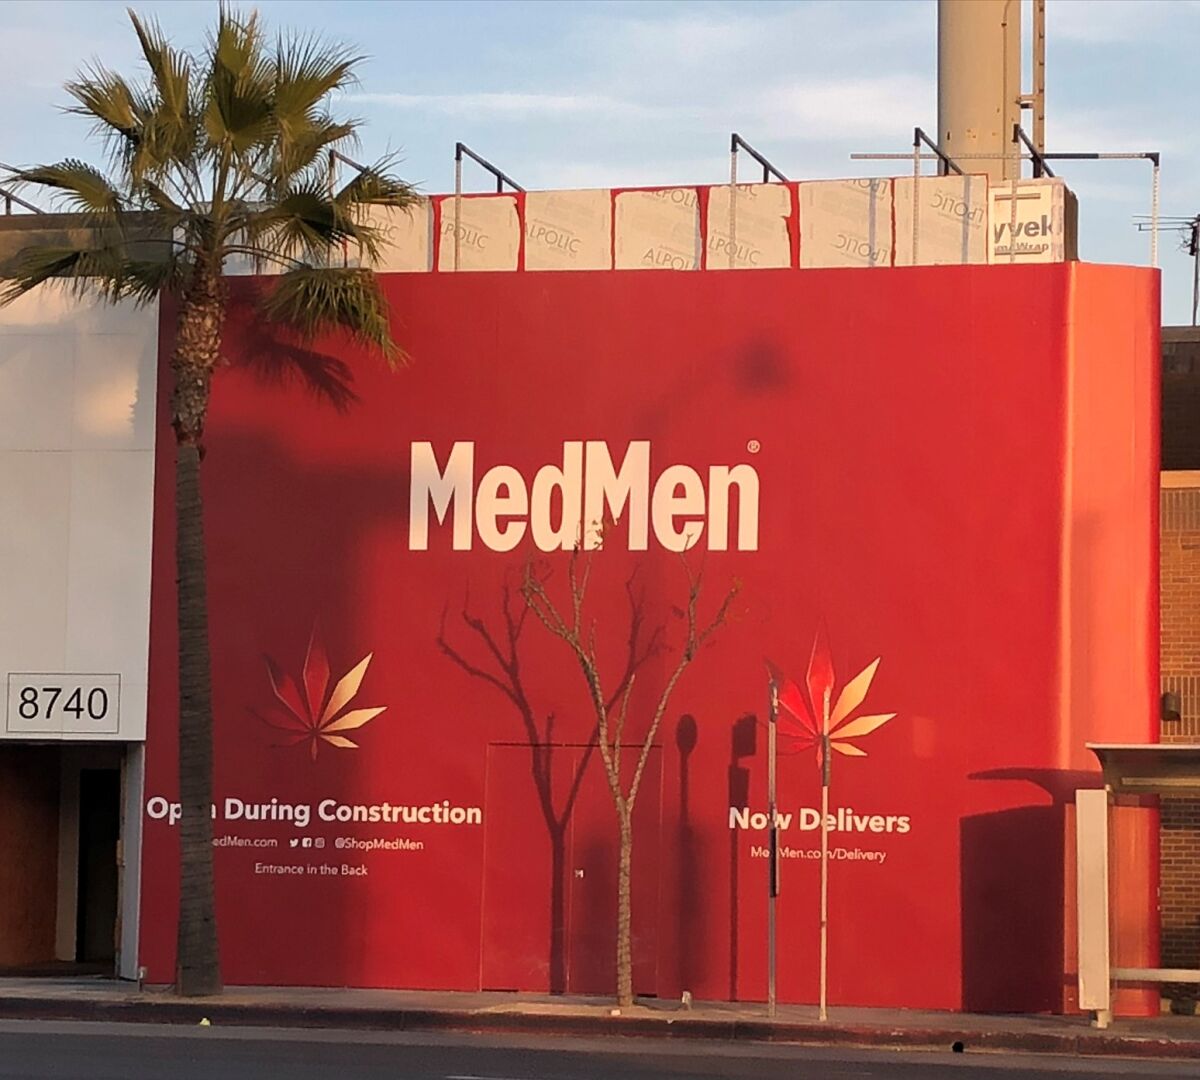 A red wall that says "MedMen" at 8740 S. Sepulveda Blvd.